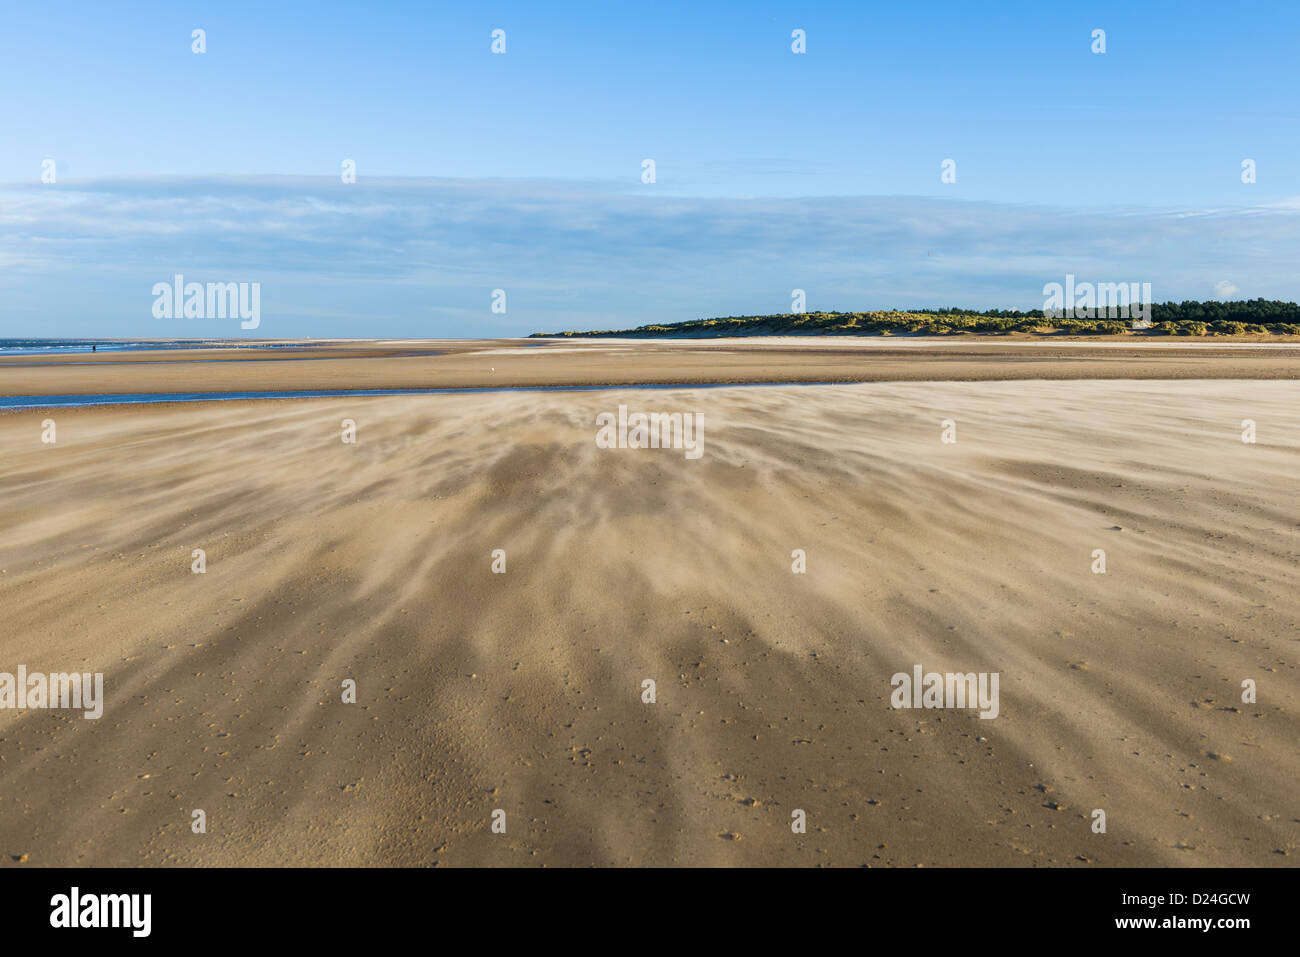 Windblown sand causing patterning, Holkham Bay, Norfolk, England Stock Photo